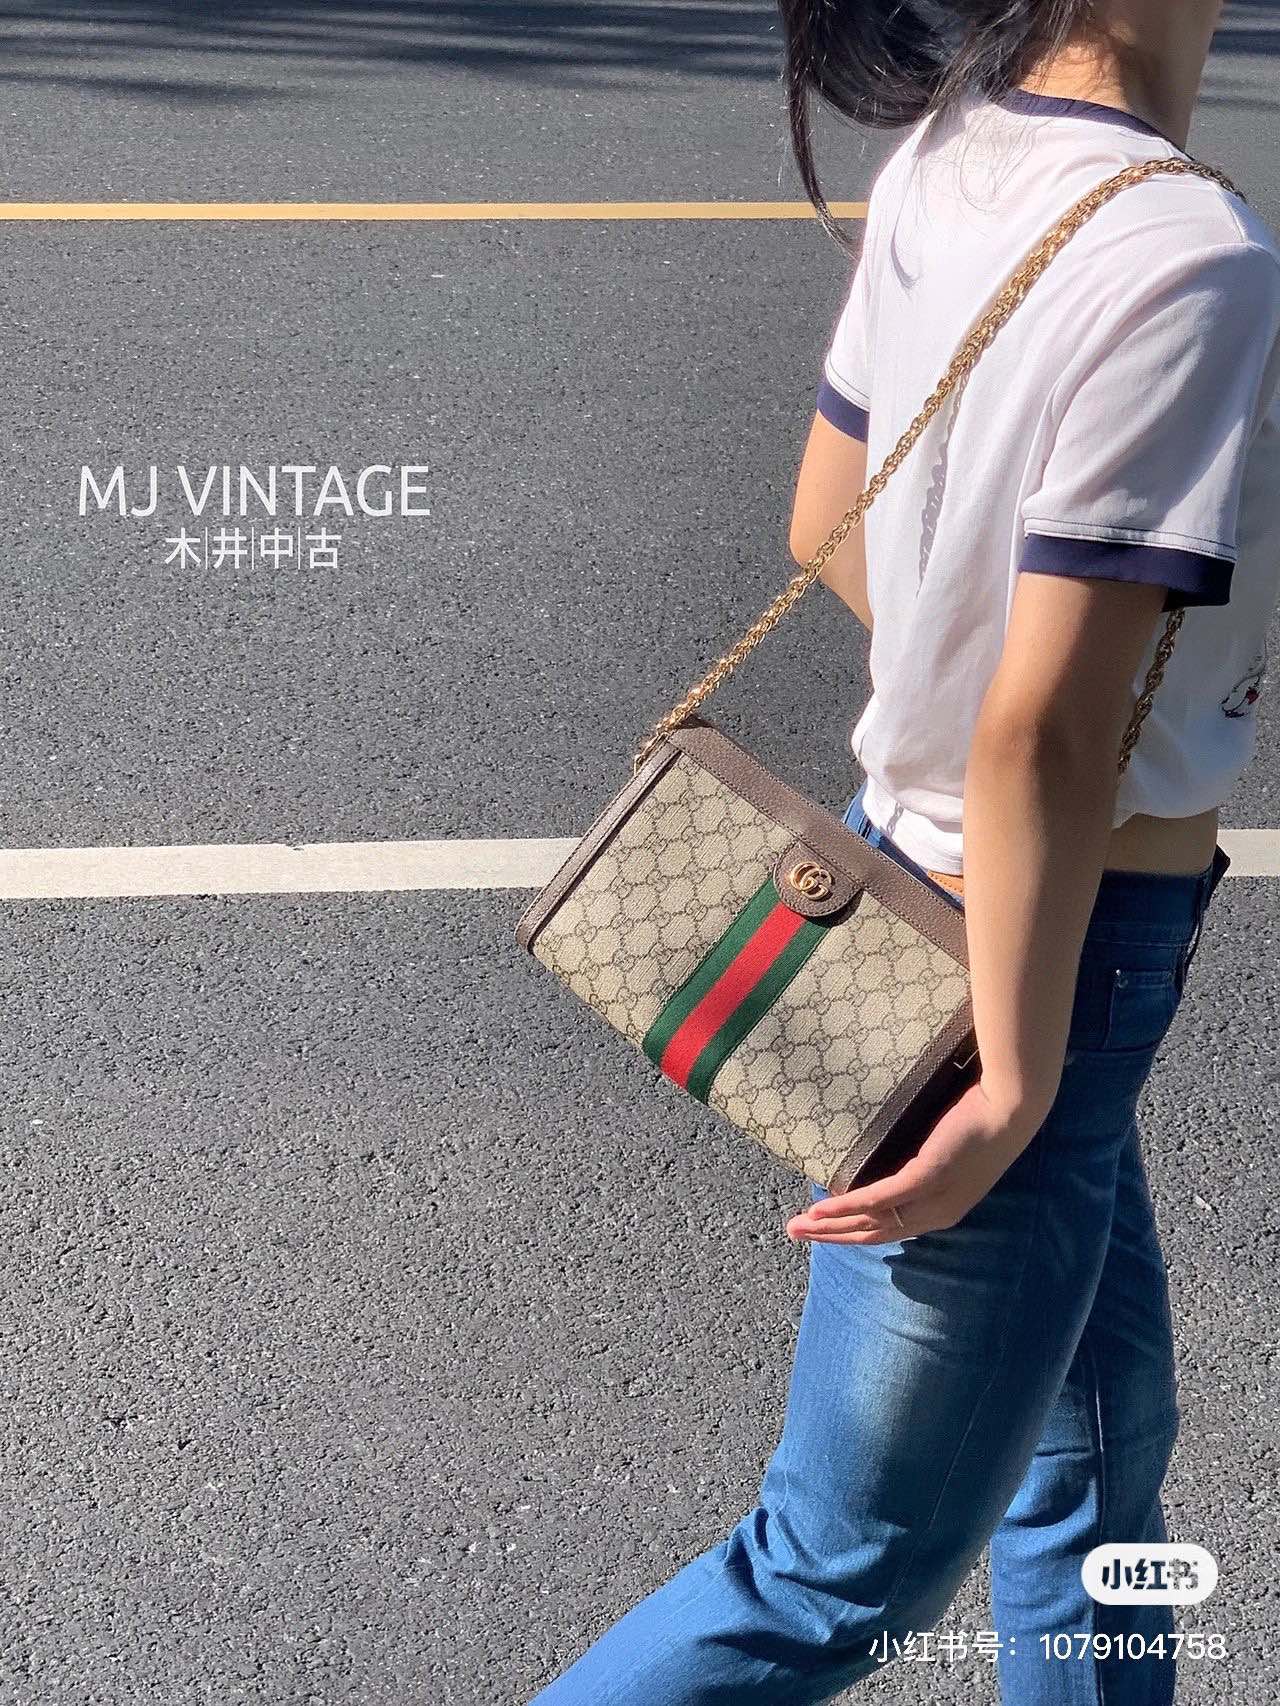 Gucci Ophidia Handbag